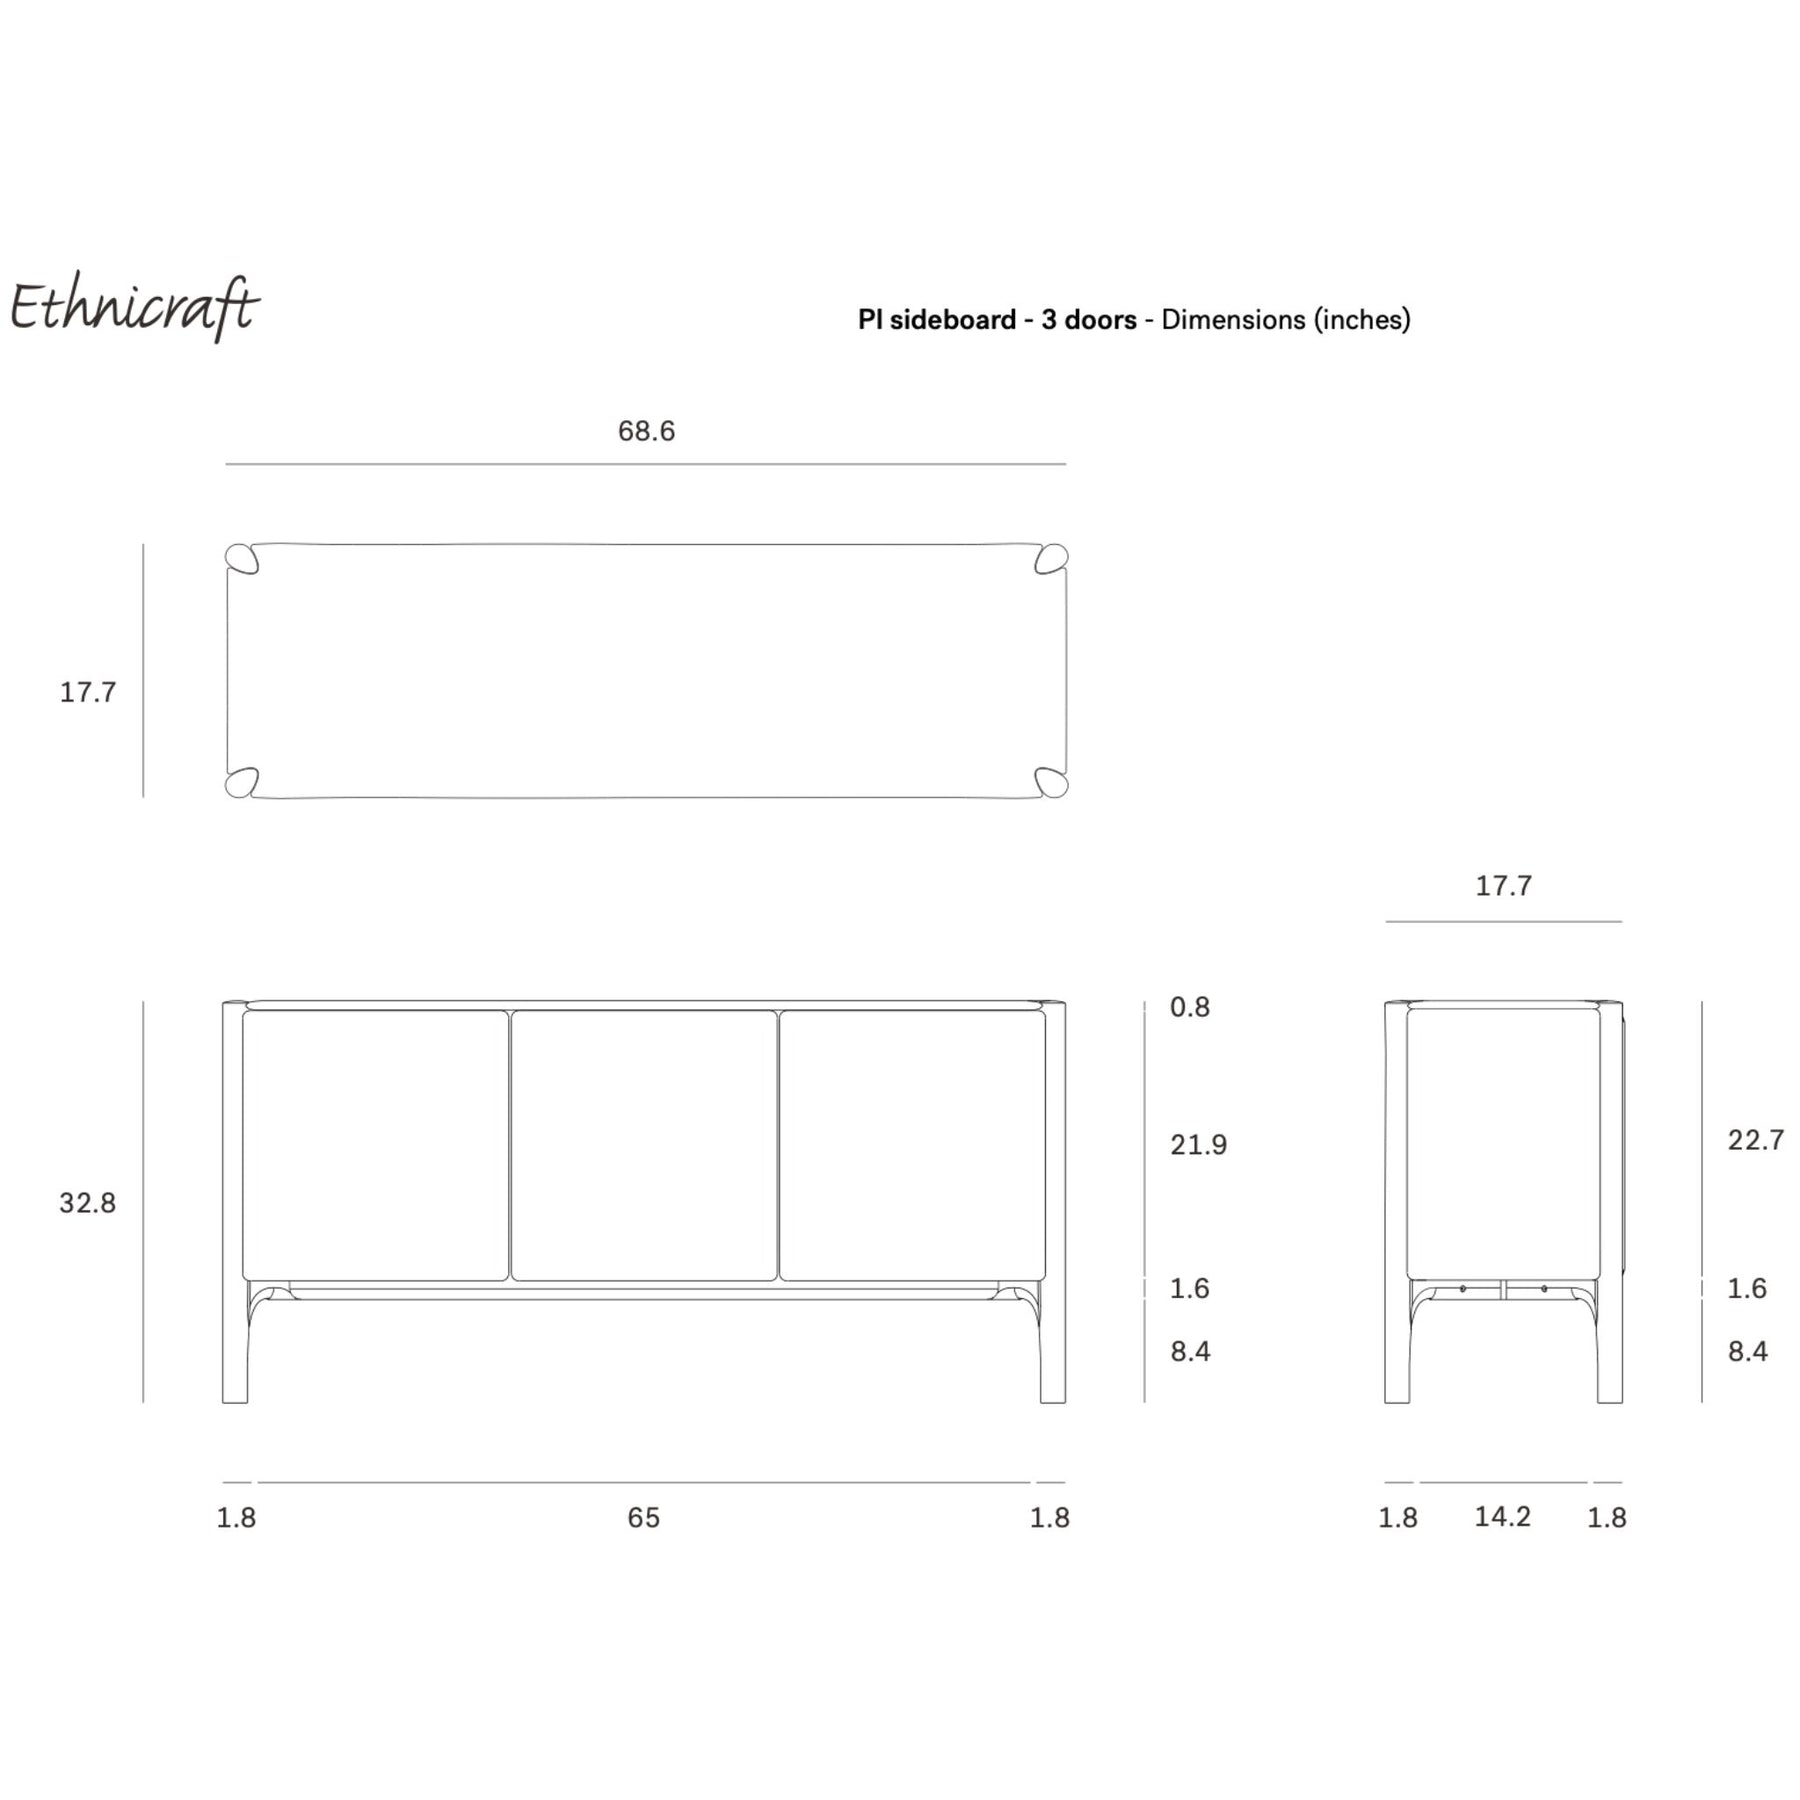 Ethnicraft Pi Sideboard 3-Door 51318 Line Drawing Dimensions